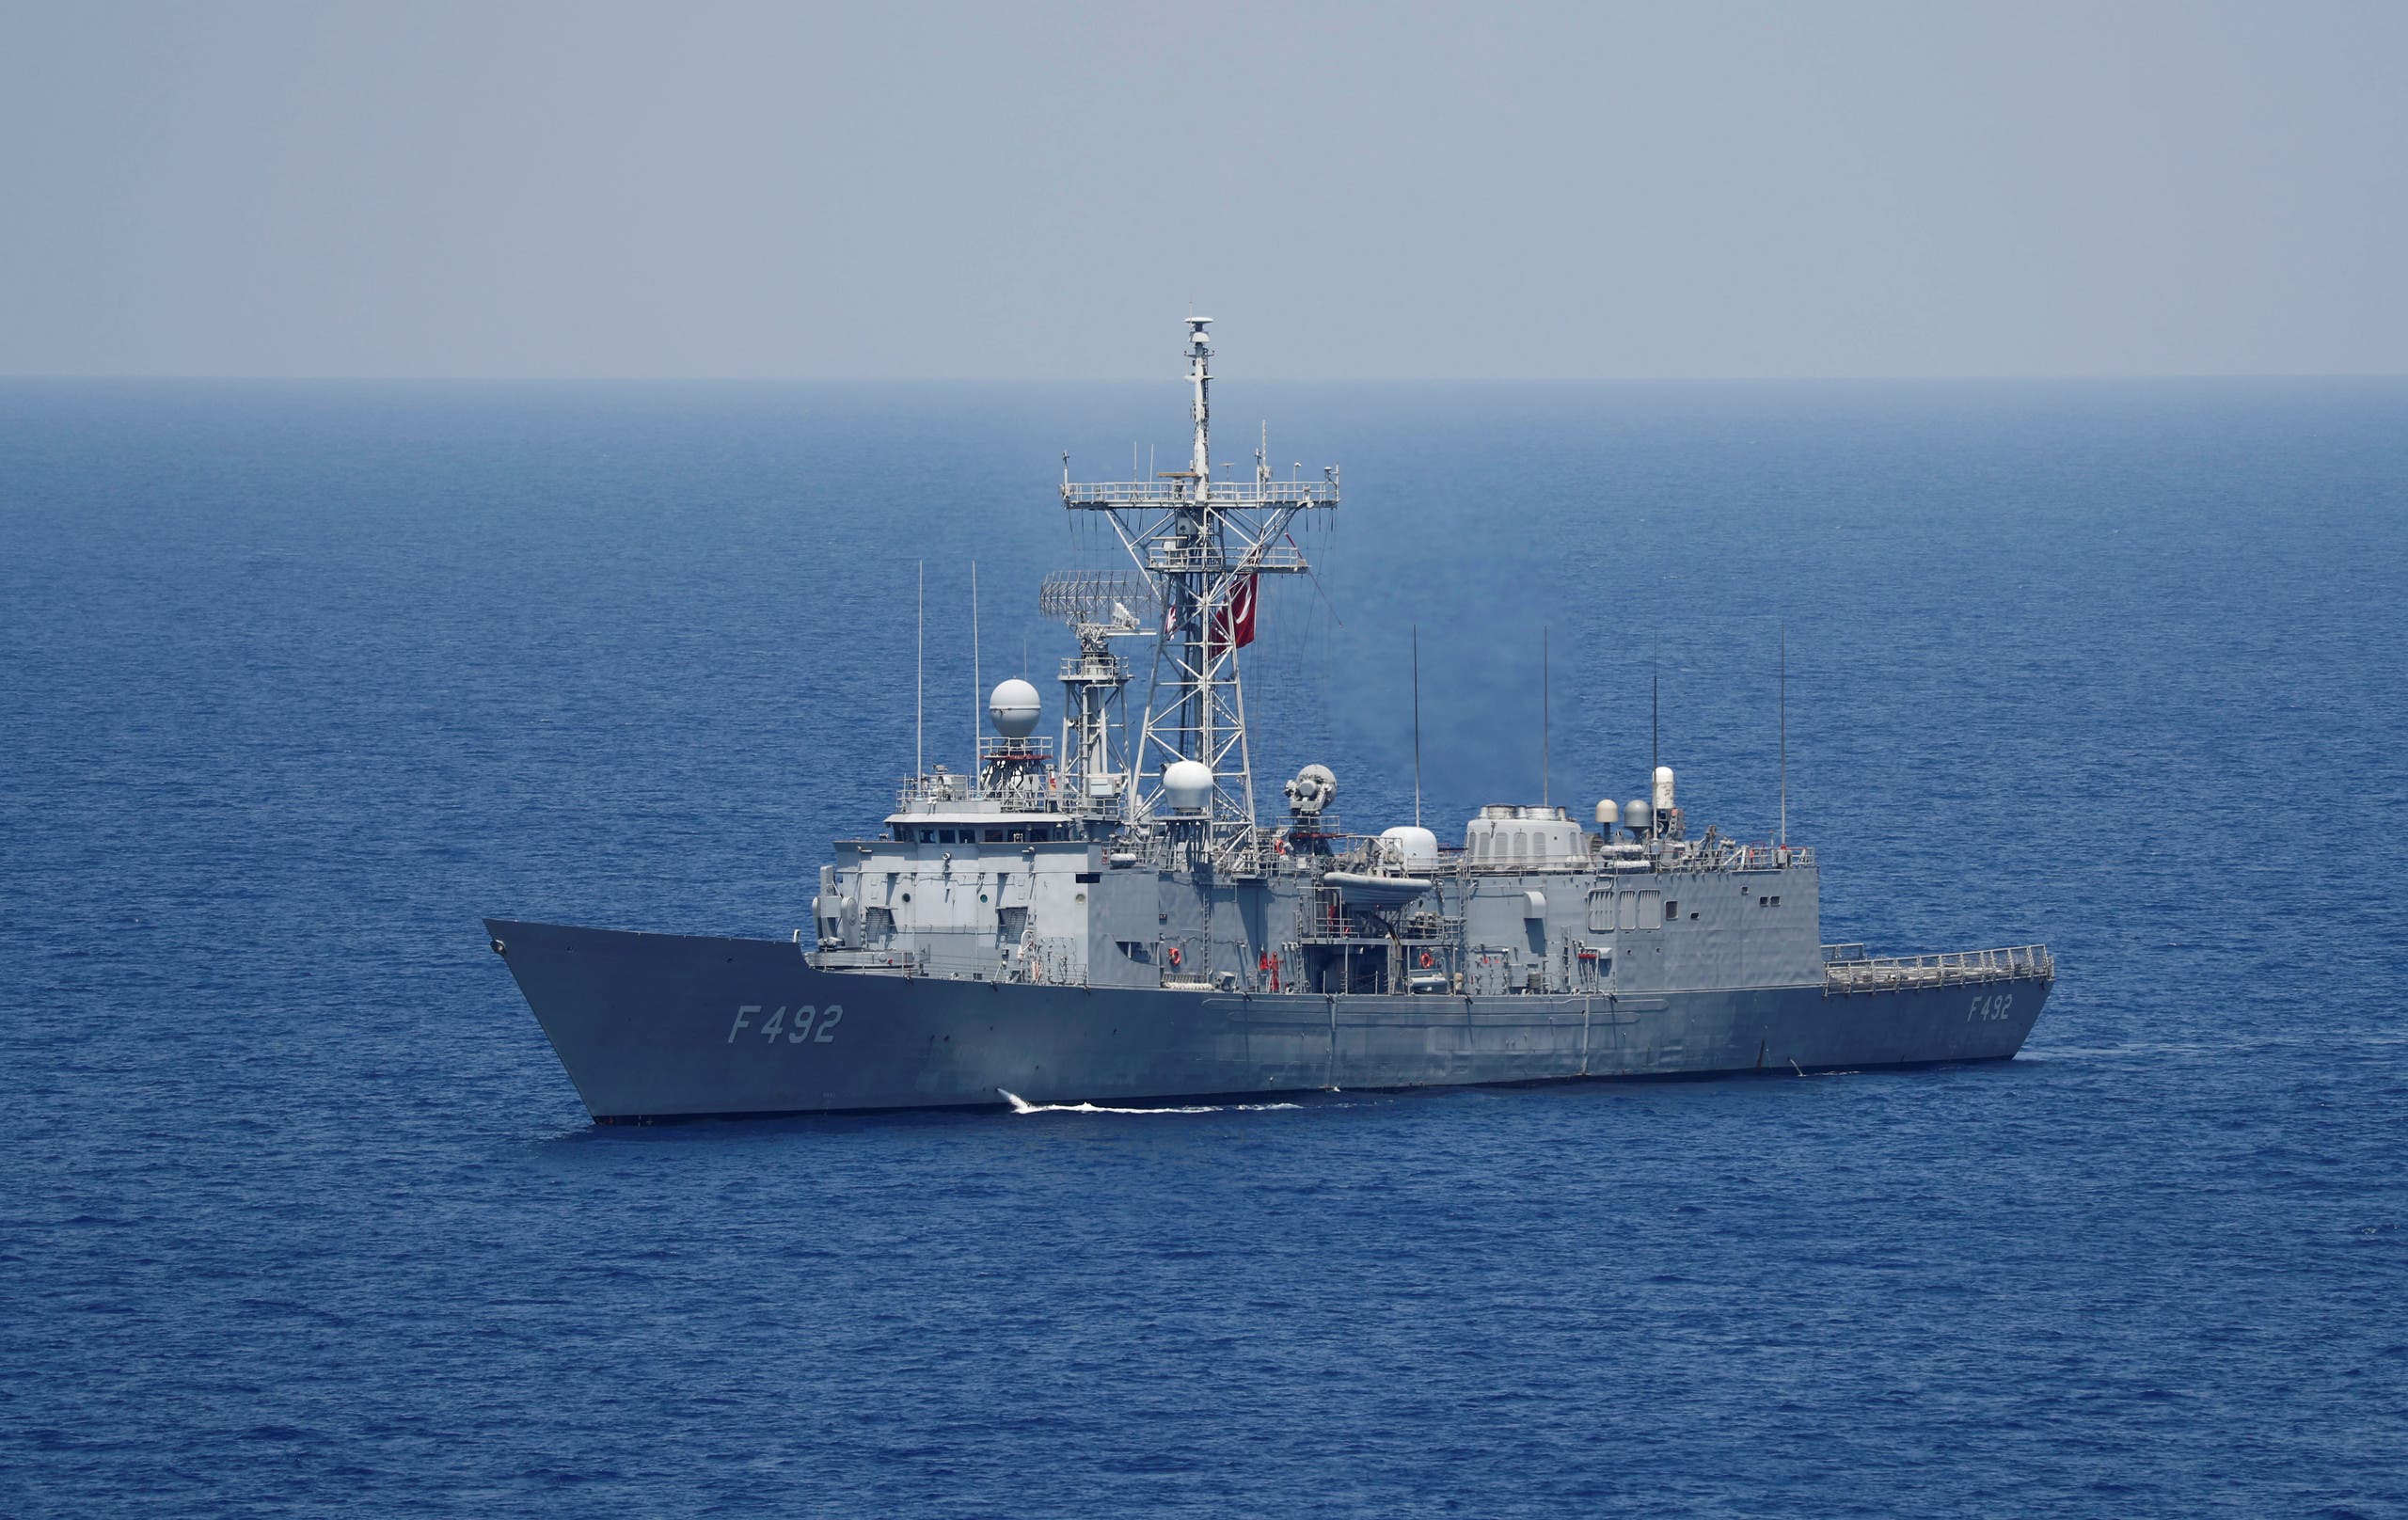 Turkish Navy frigate TCG Gemlik (F-492) escorts Turkish drilling vessel Yavuz in the eastern Mediterranean Sea off Cyprus, August 6, 2019. (Reuters)